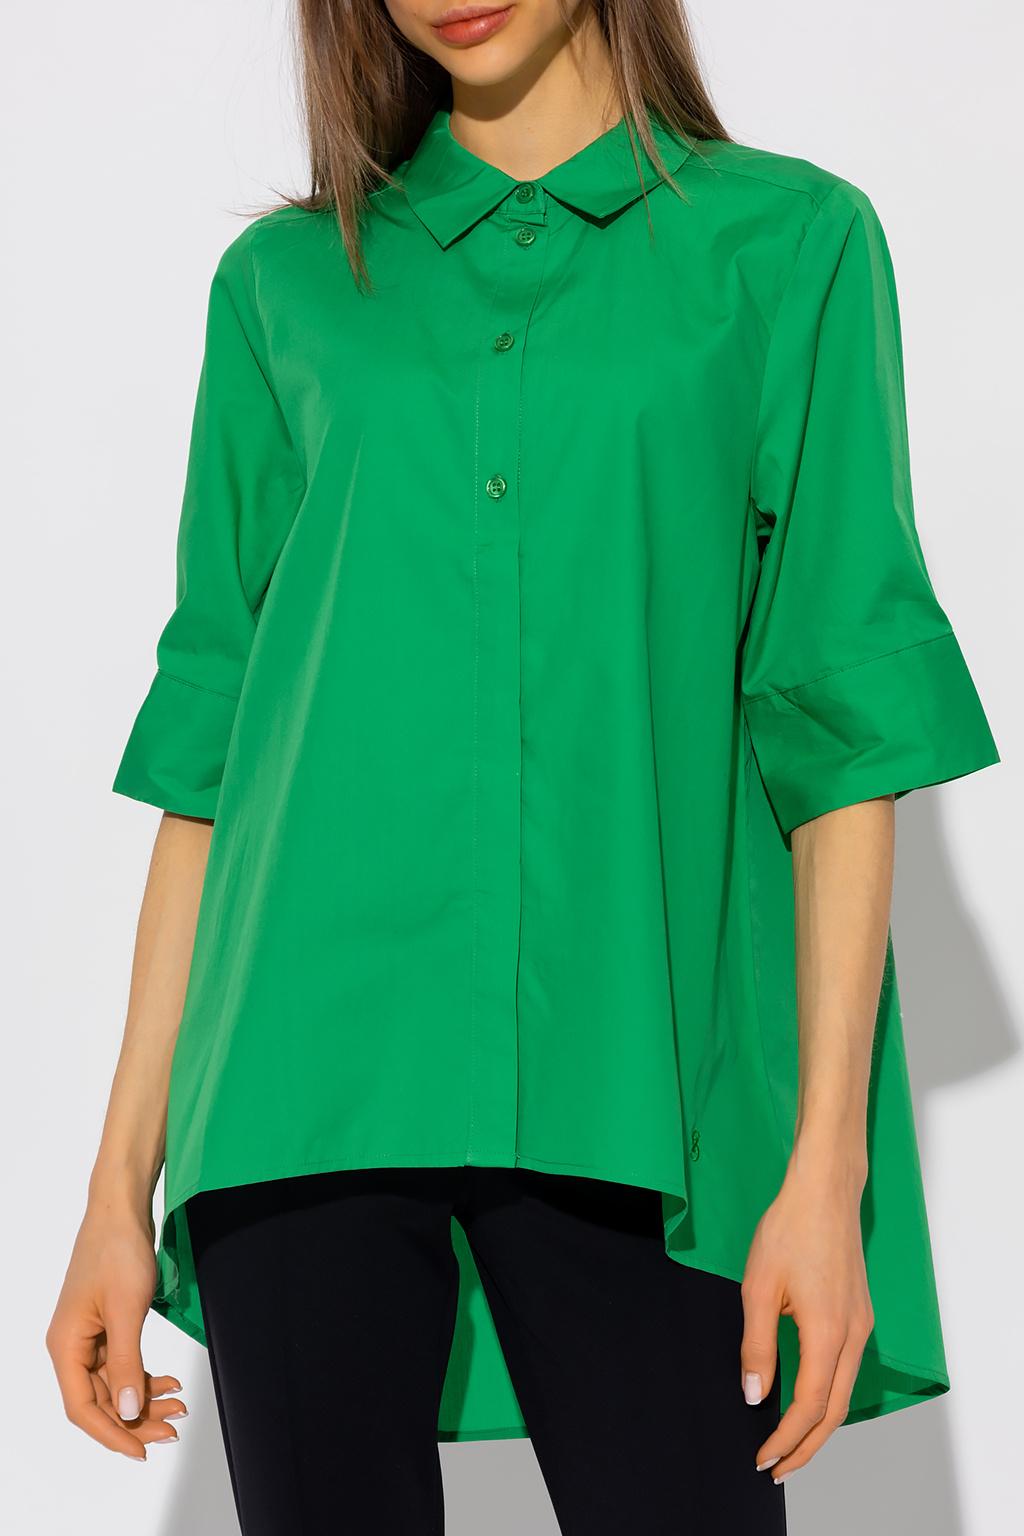 Gestuz Denim Luellagz Shirt in Green Womens Clothing Tops Shirts 